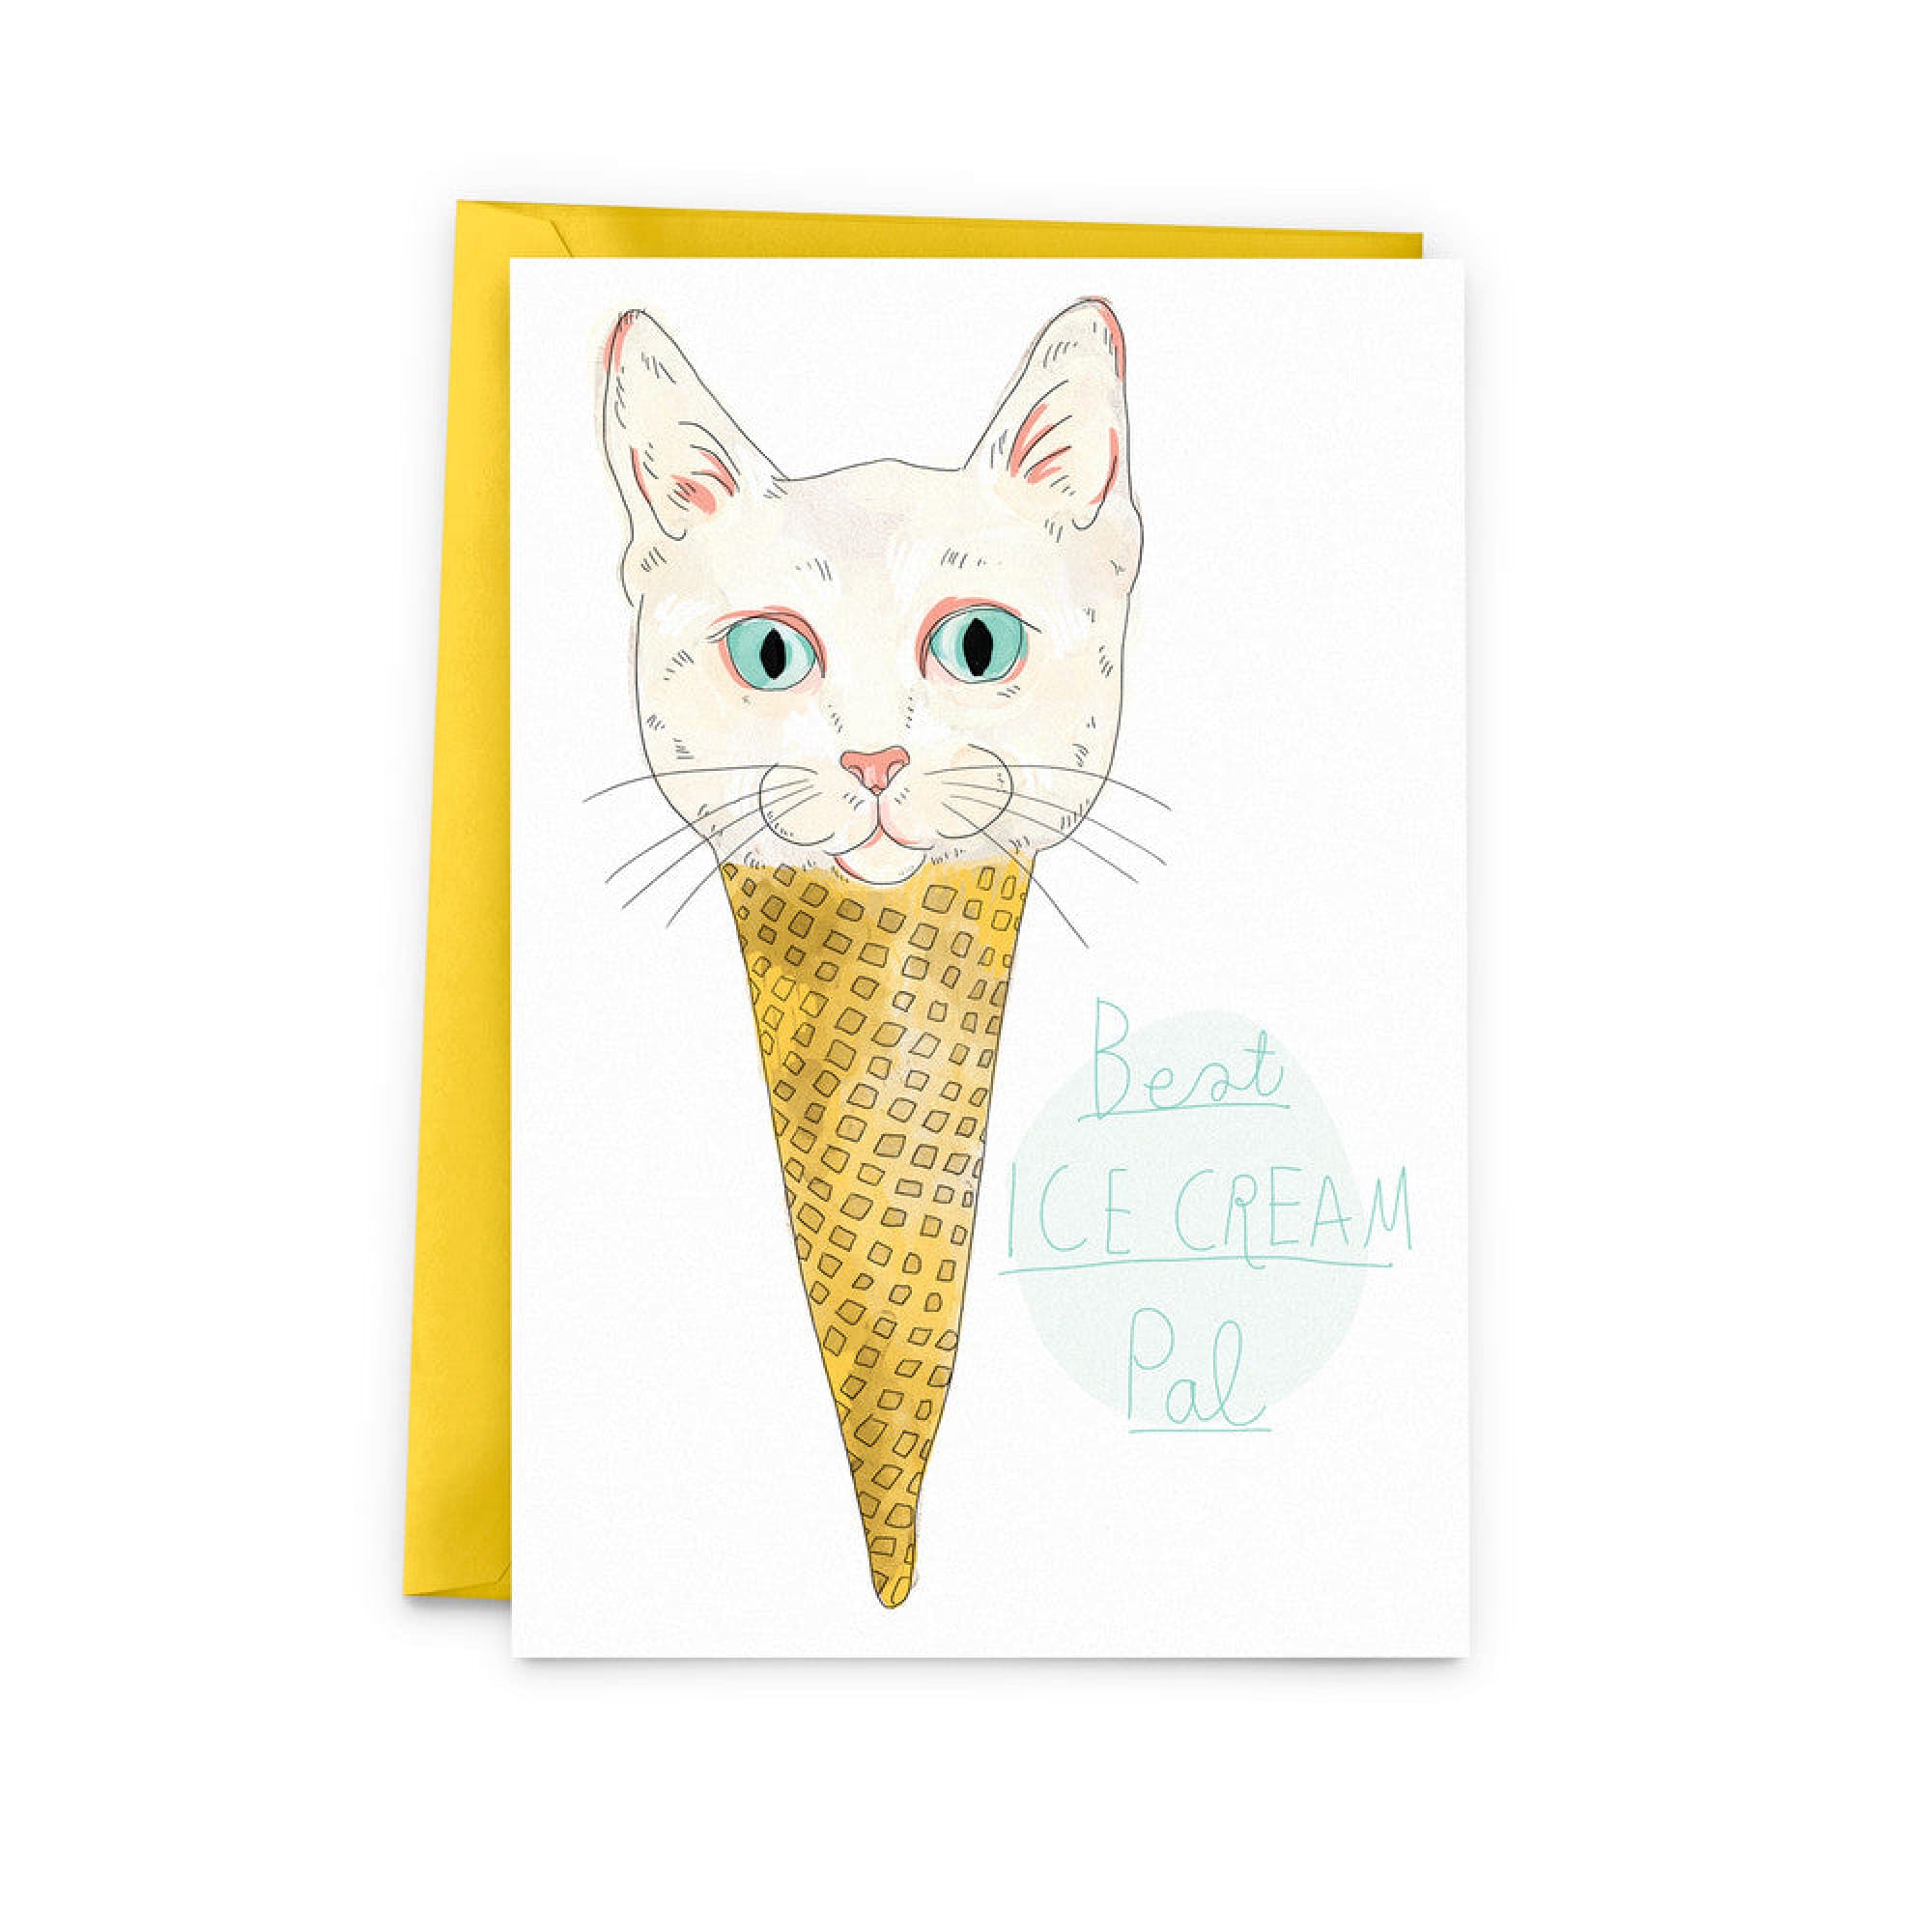 Best Ice Cream Pal Card - The Baltic Club